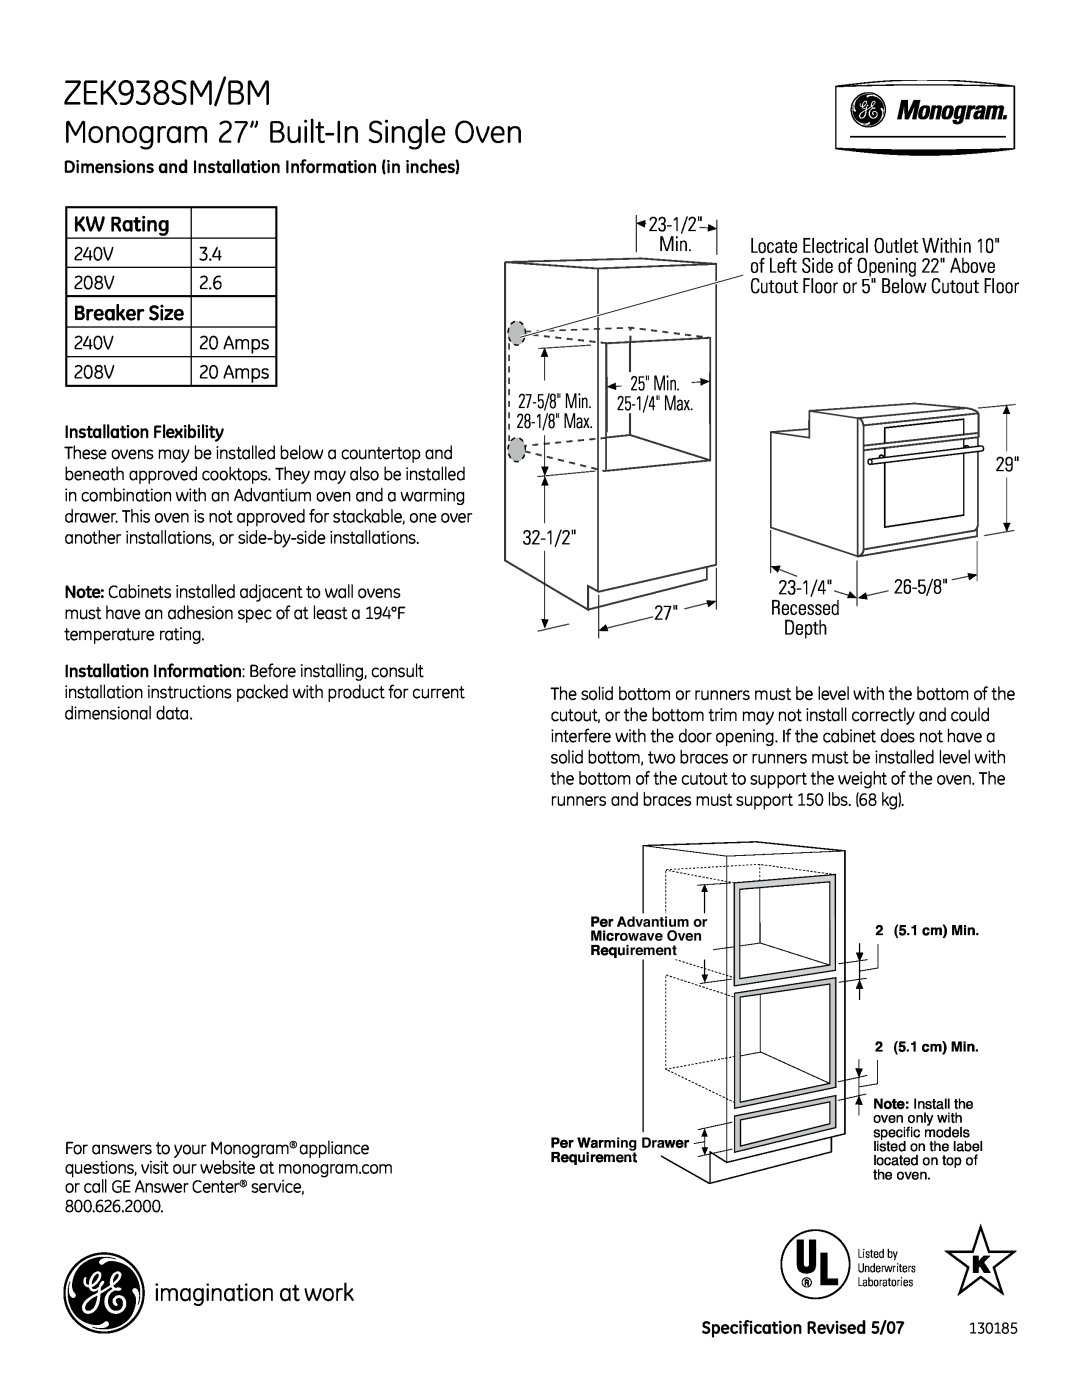 GE ZEK938SM/BM installation instructions Monogram 27” Built-In Single Oven, KW Rating 